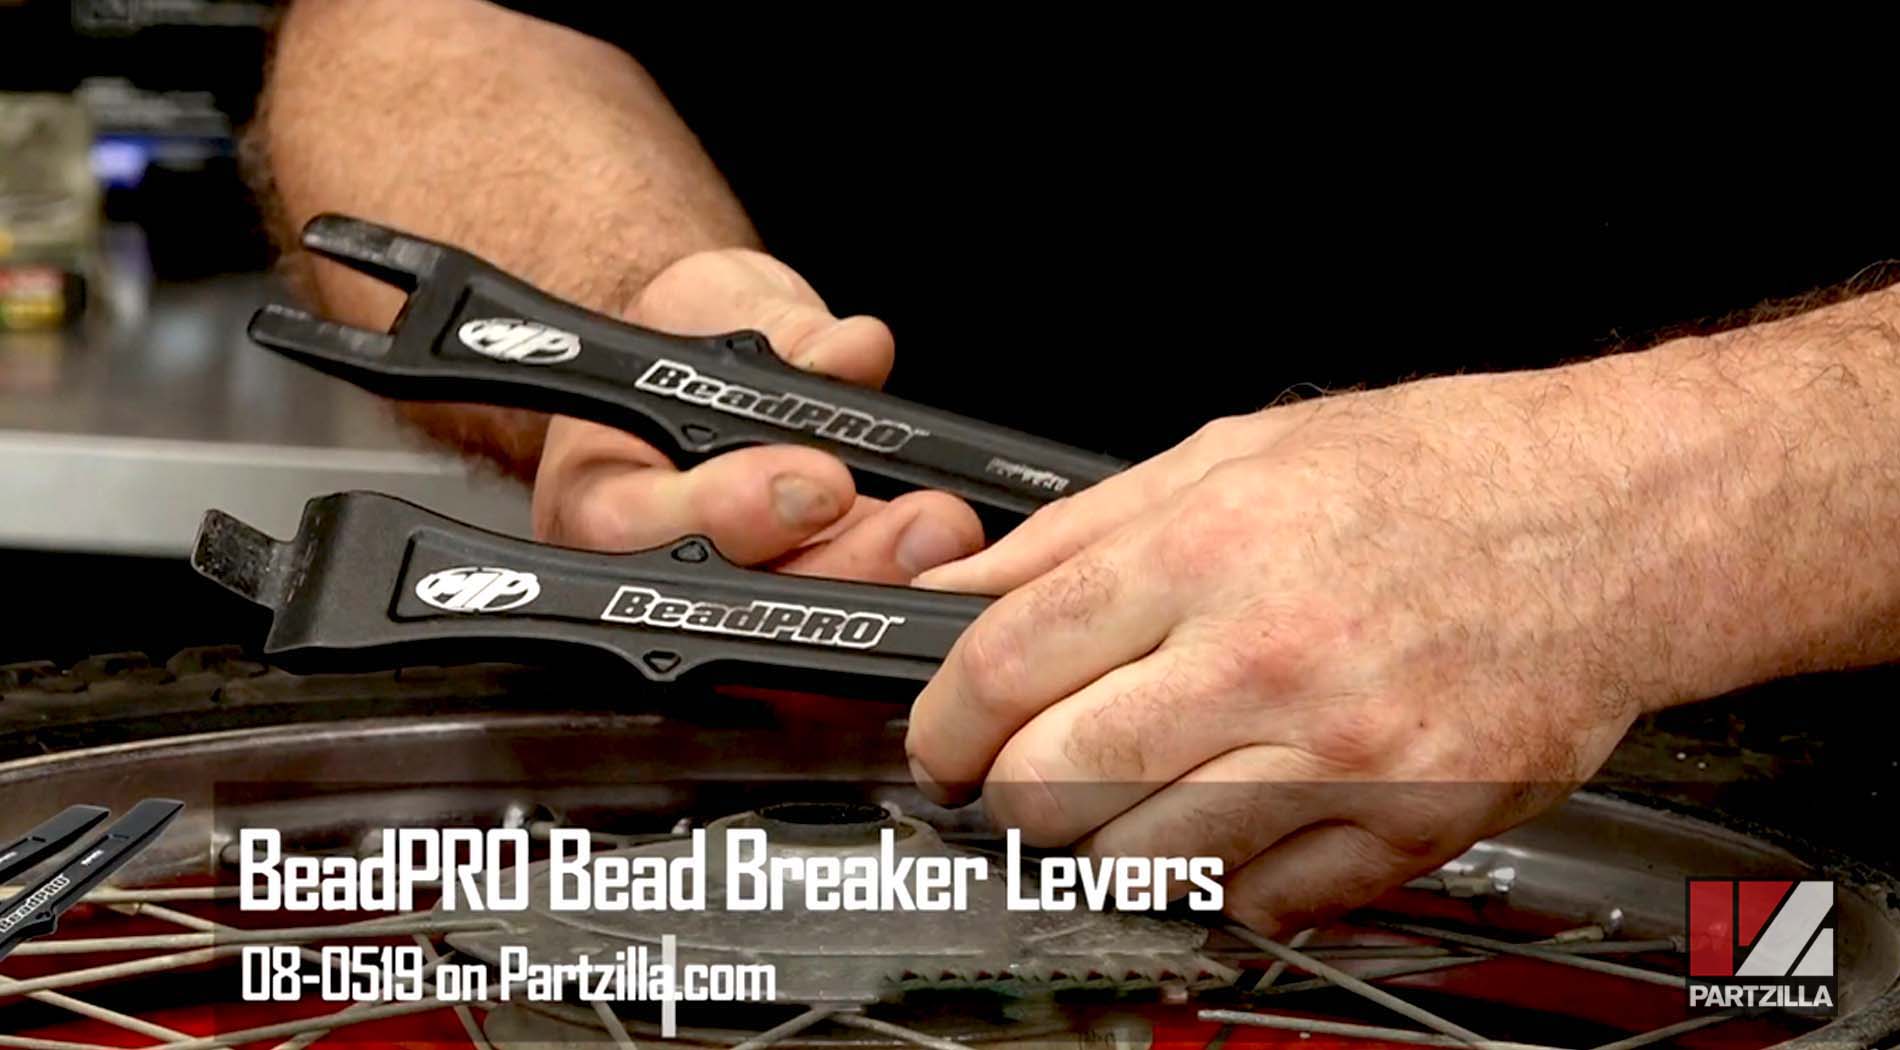 Motion Pro tire tools bead breaker levers